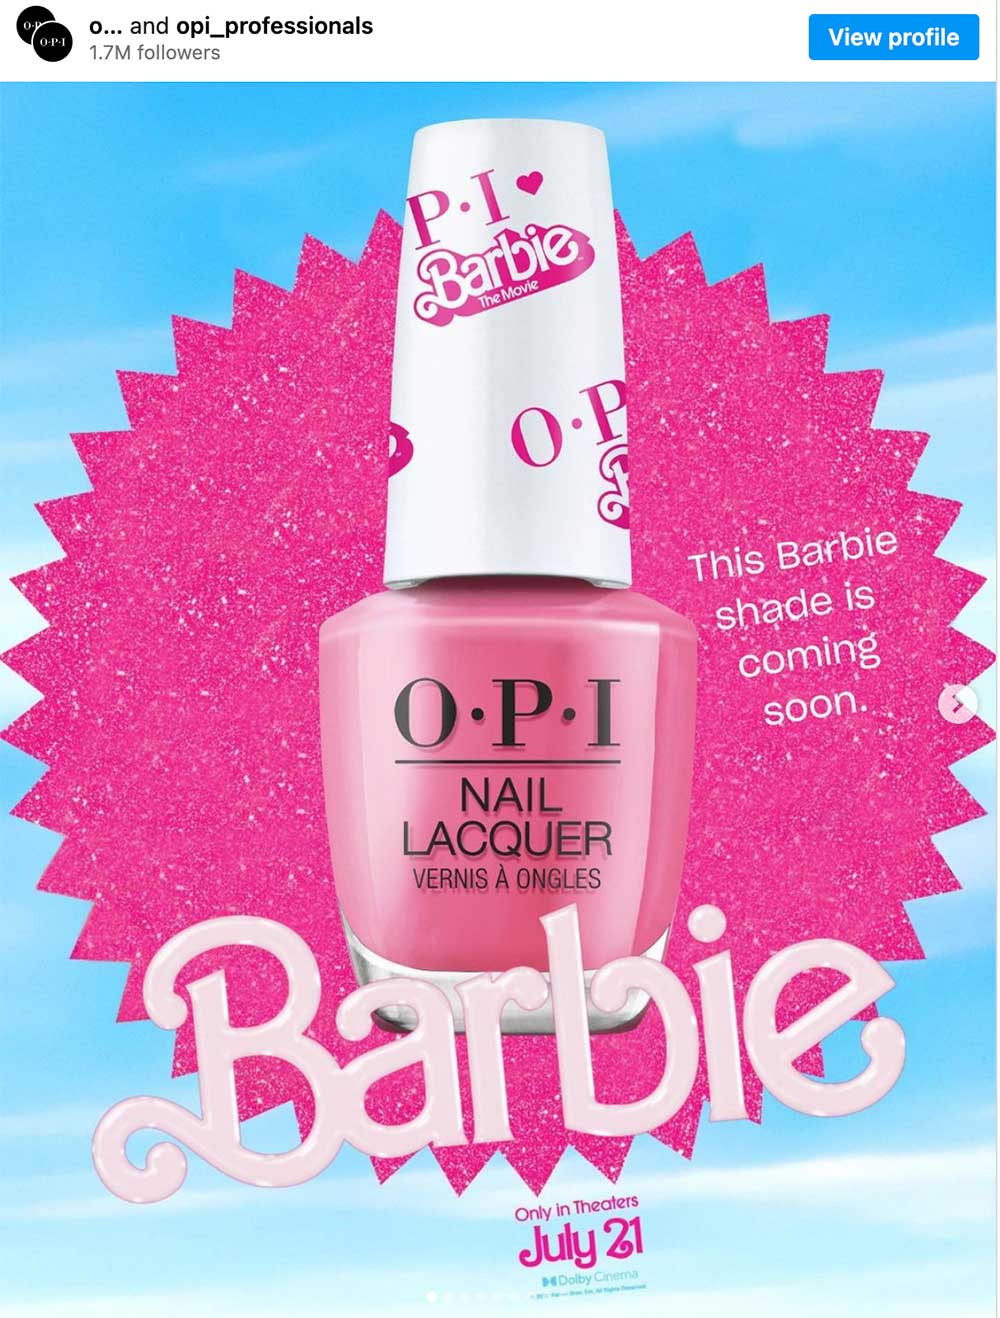 Barbie x OPI Collaboration